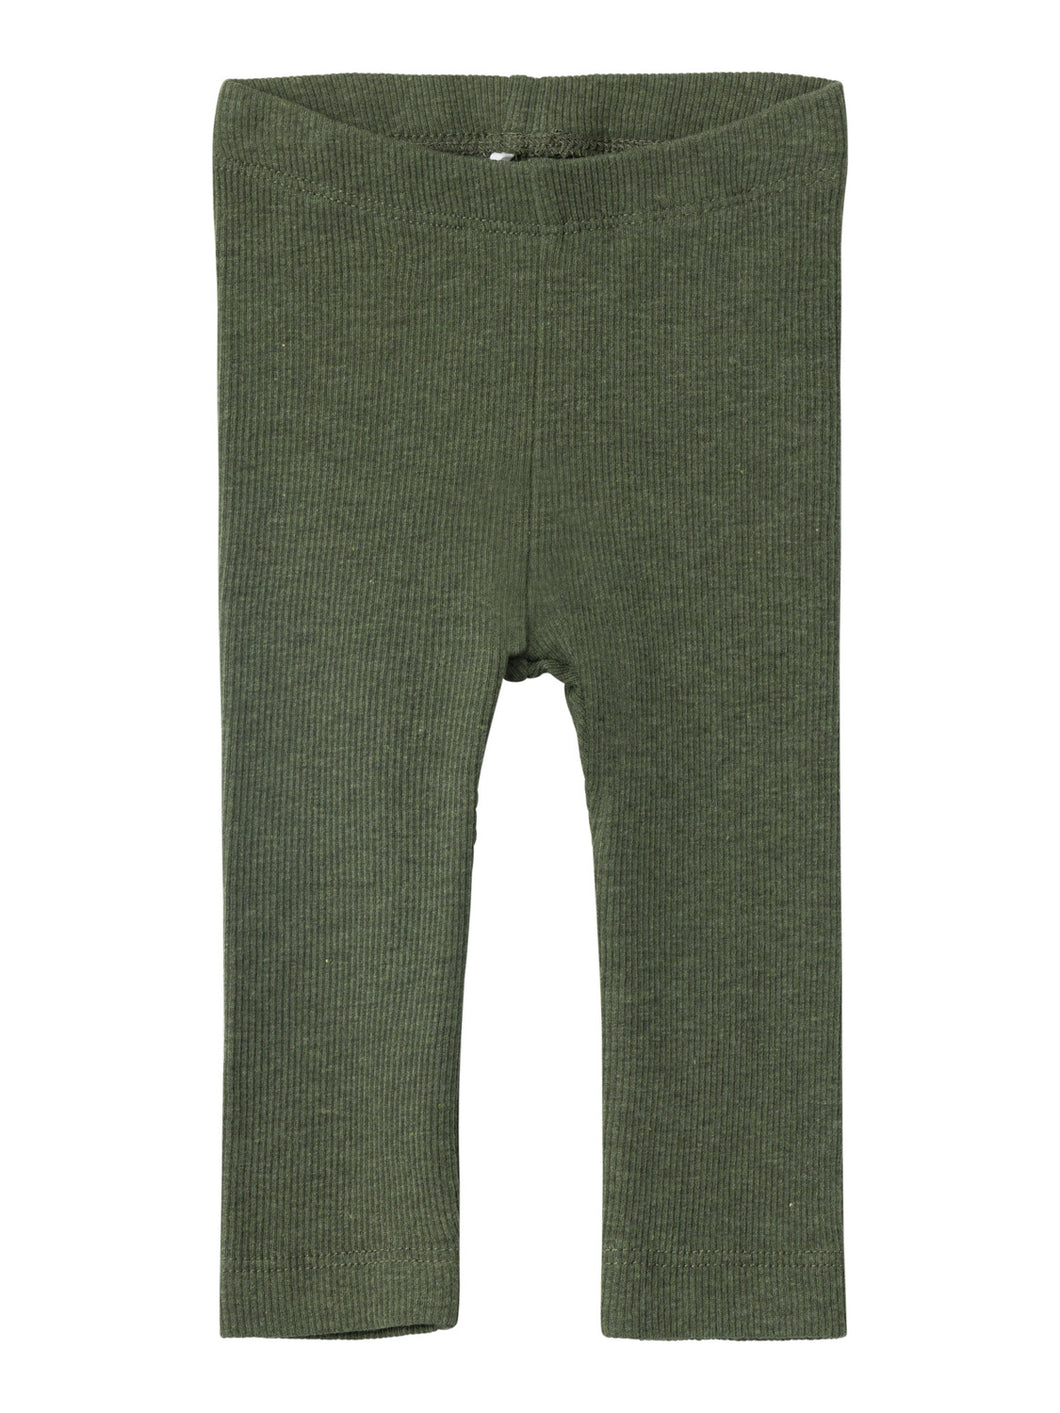 NBNKAB Trousers - Rifle Green